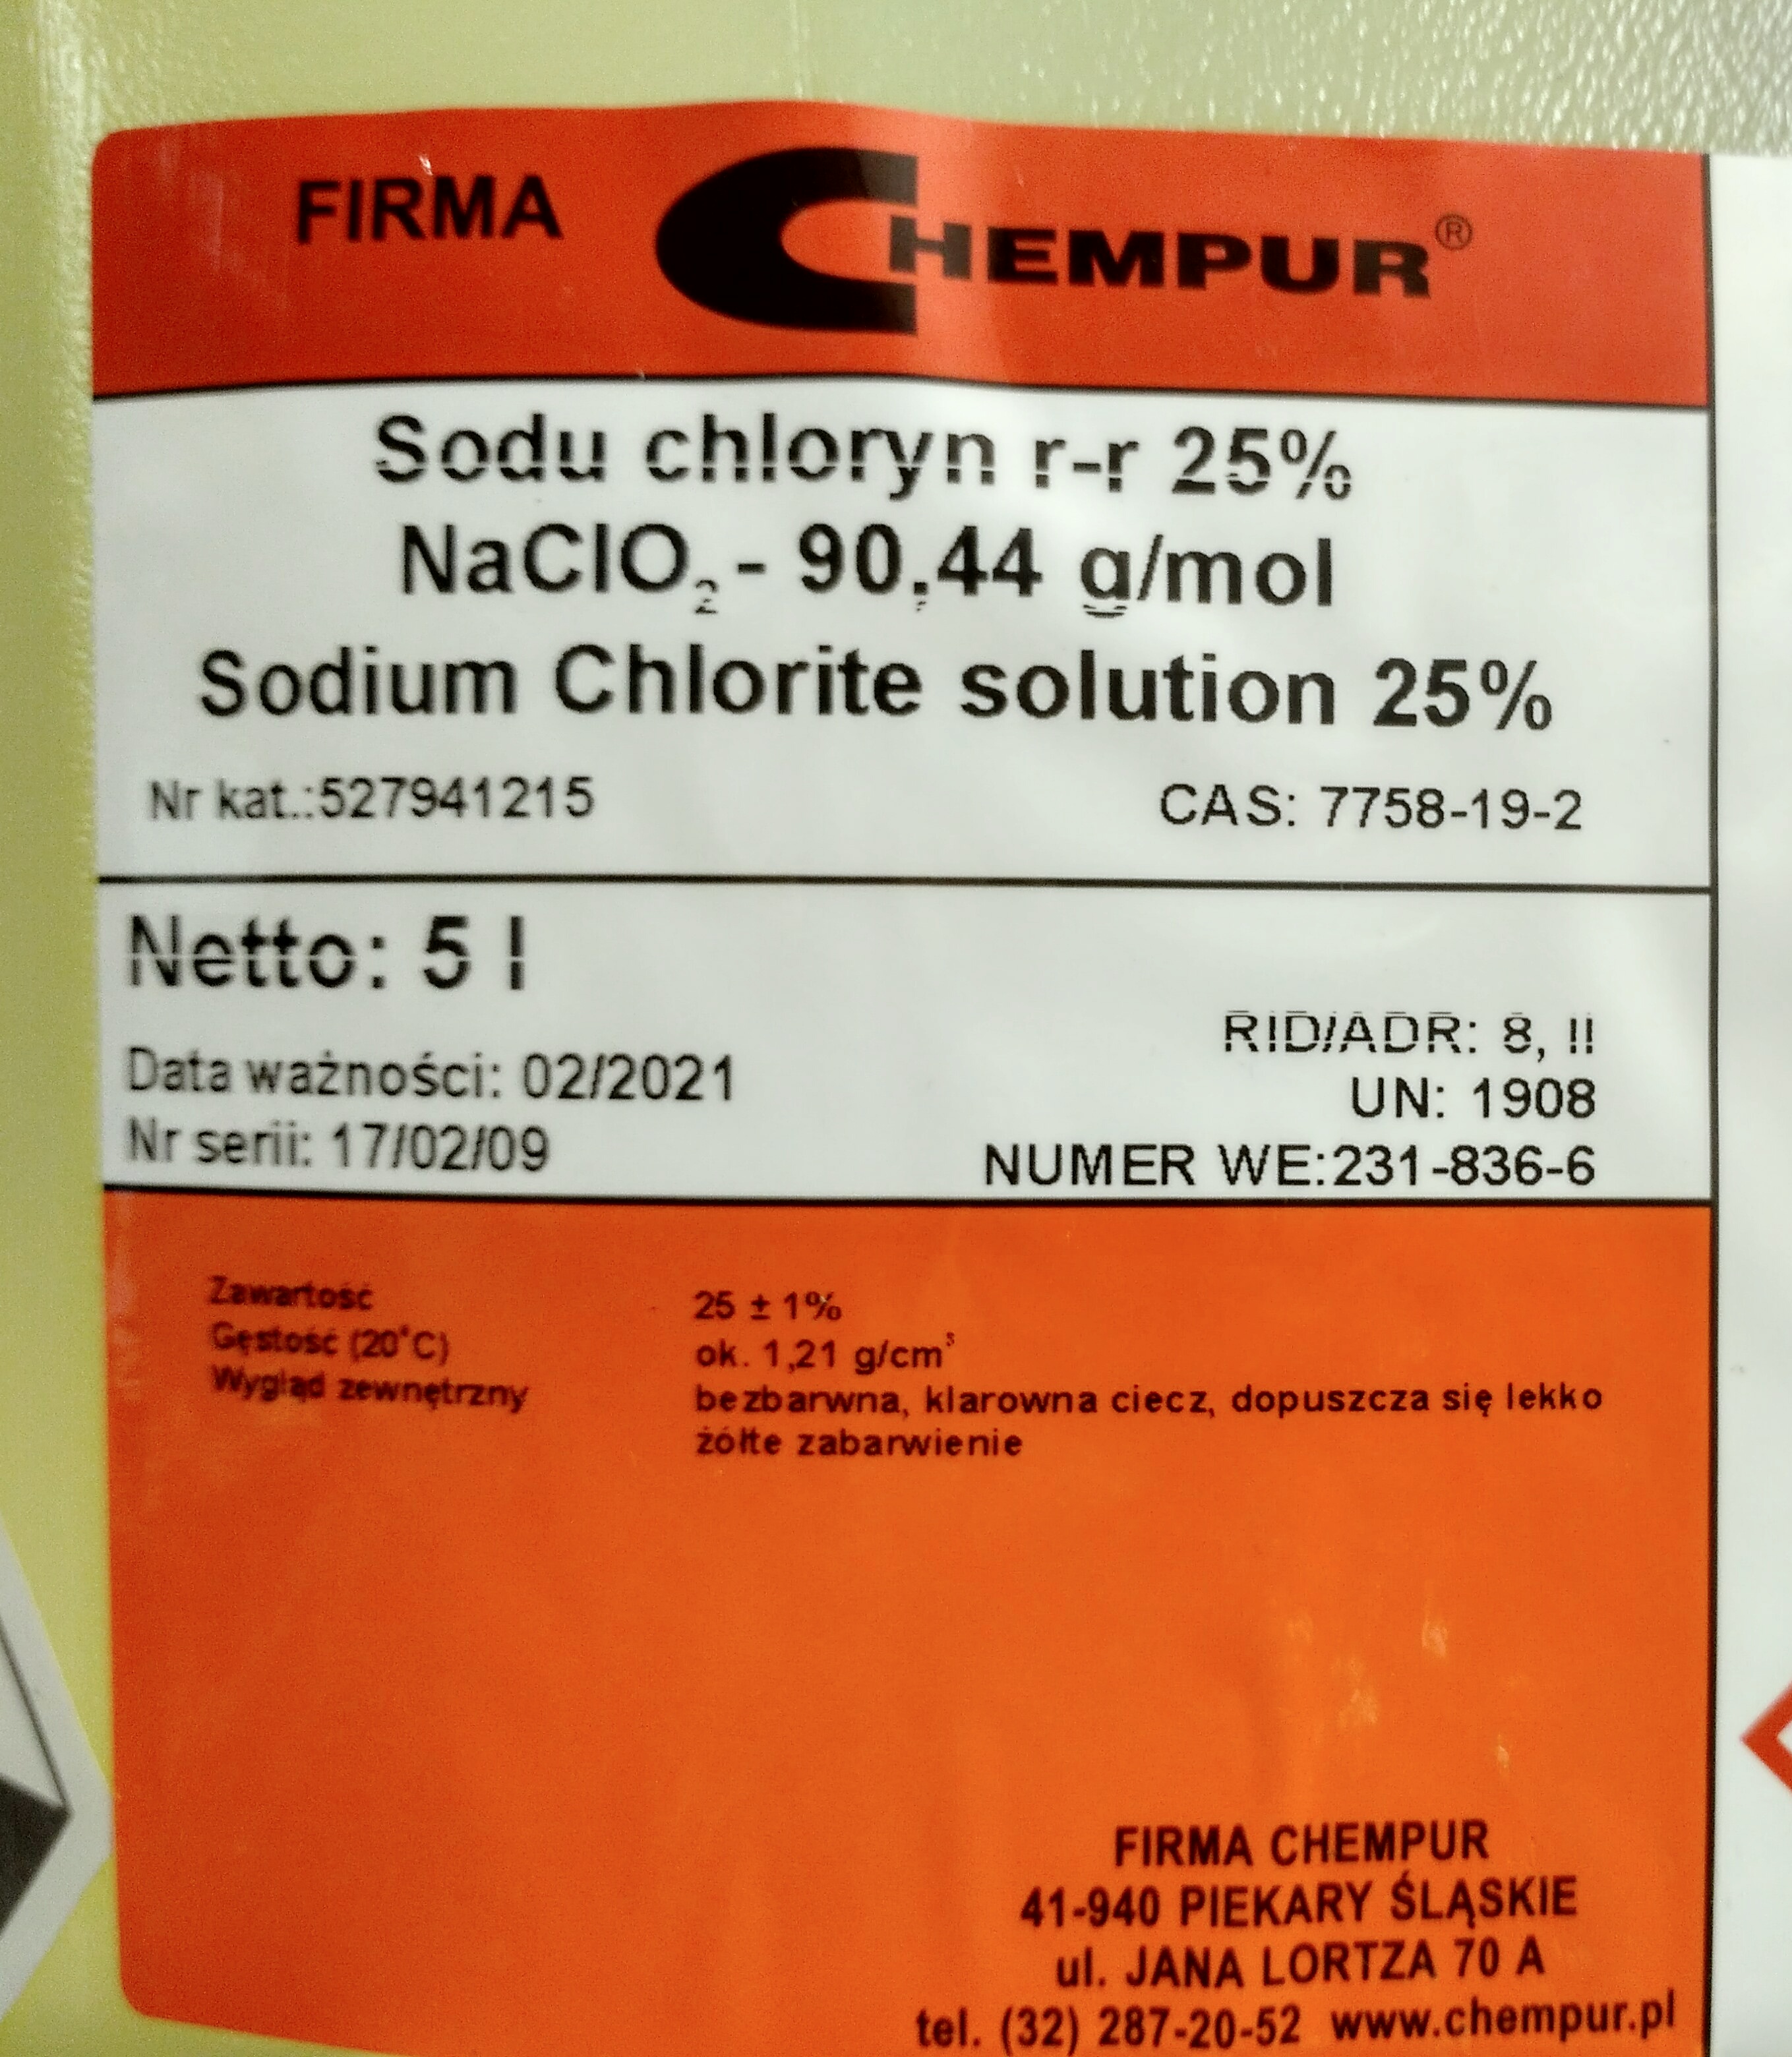 Sodium chlorite solution 25%